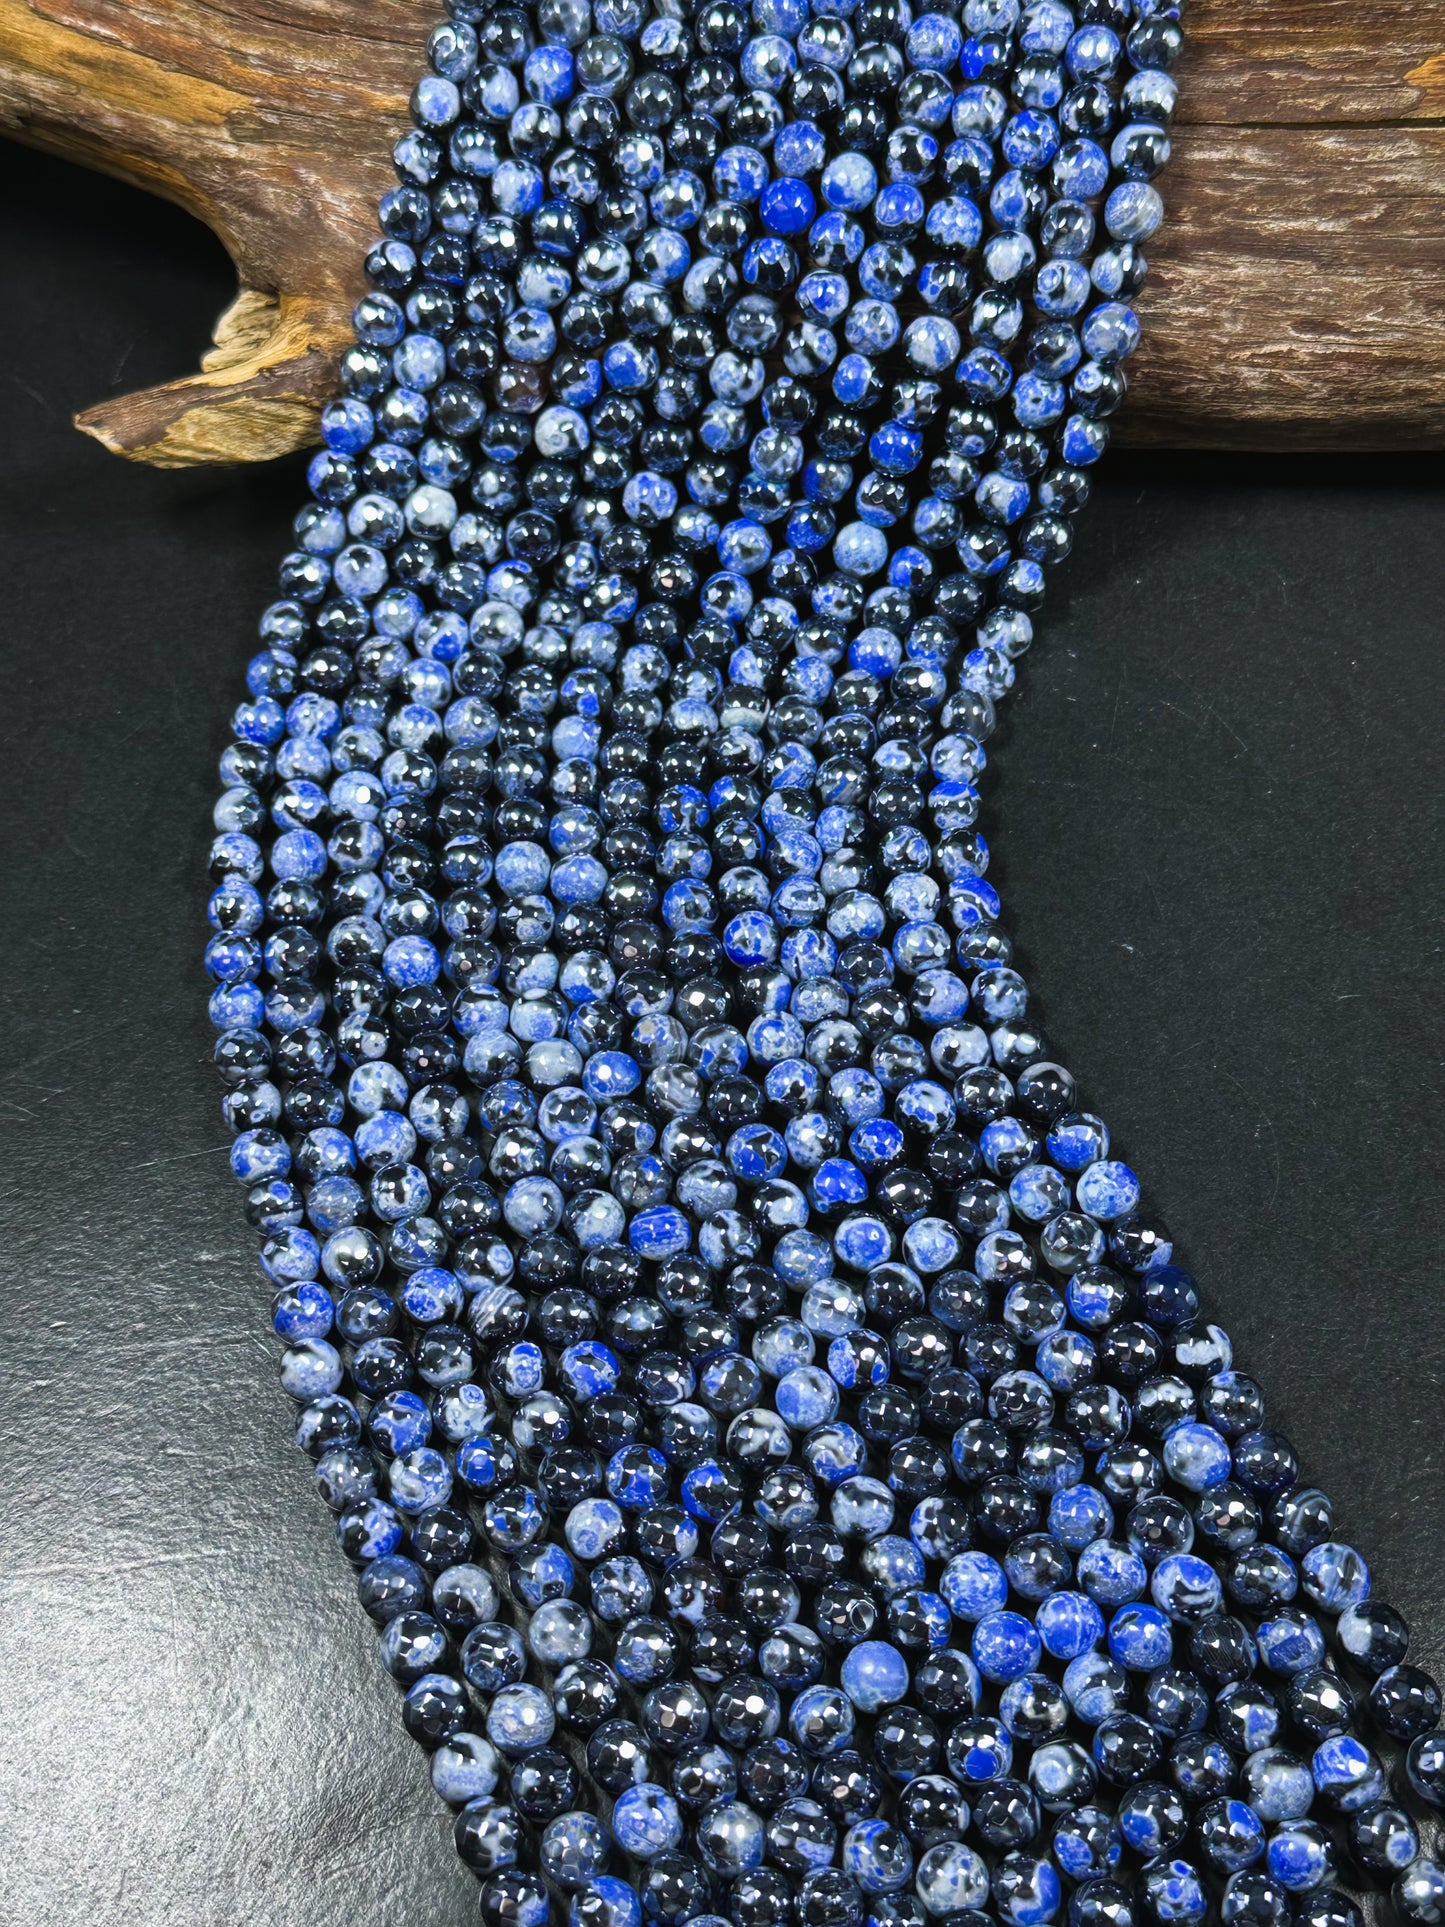 Mystic Natural Tibetan Agate Gemstone Bead Faceted 8mm 10mm Round Beads, Beautiful Mystic Blue Black Agate Stone Beads, Full Strand 15.5"